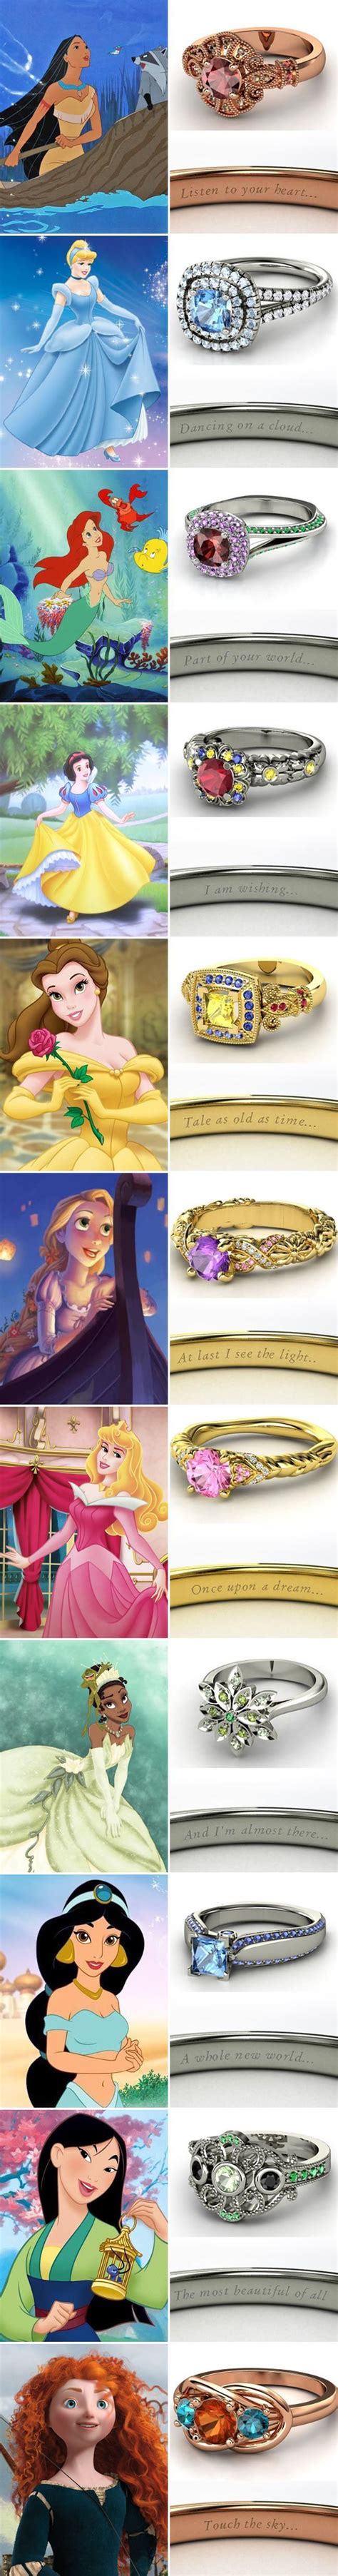 Disney Princess Wedding Rings And More Ideas For Diehard